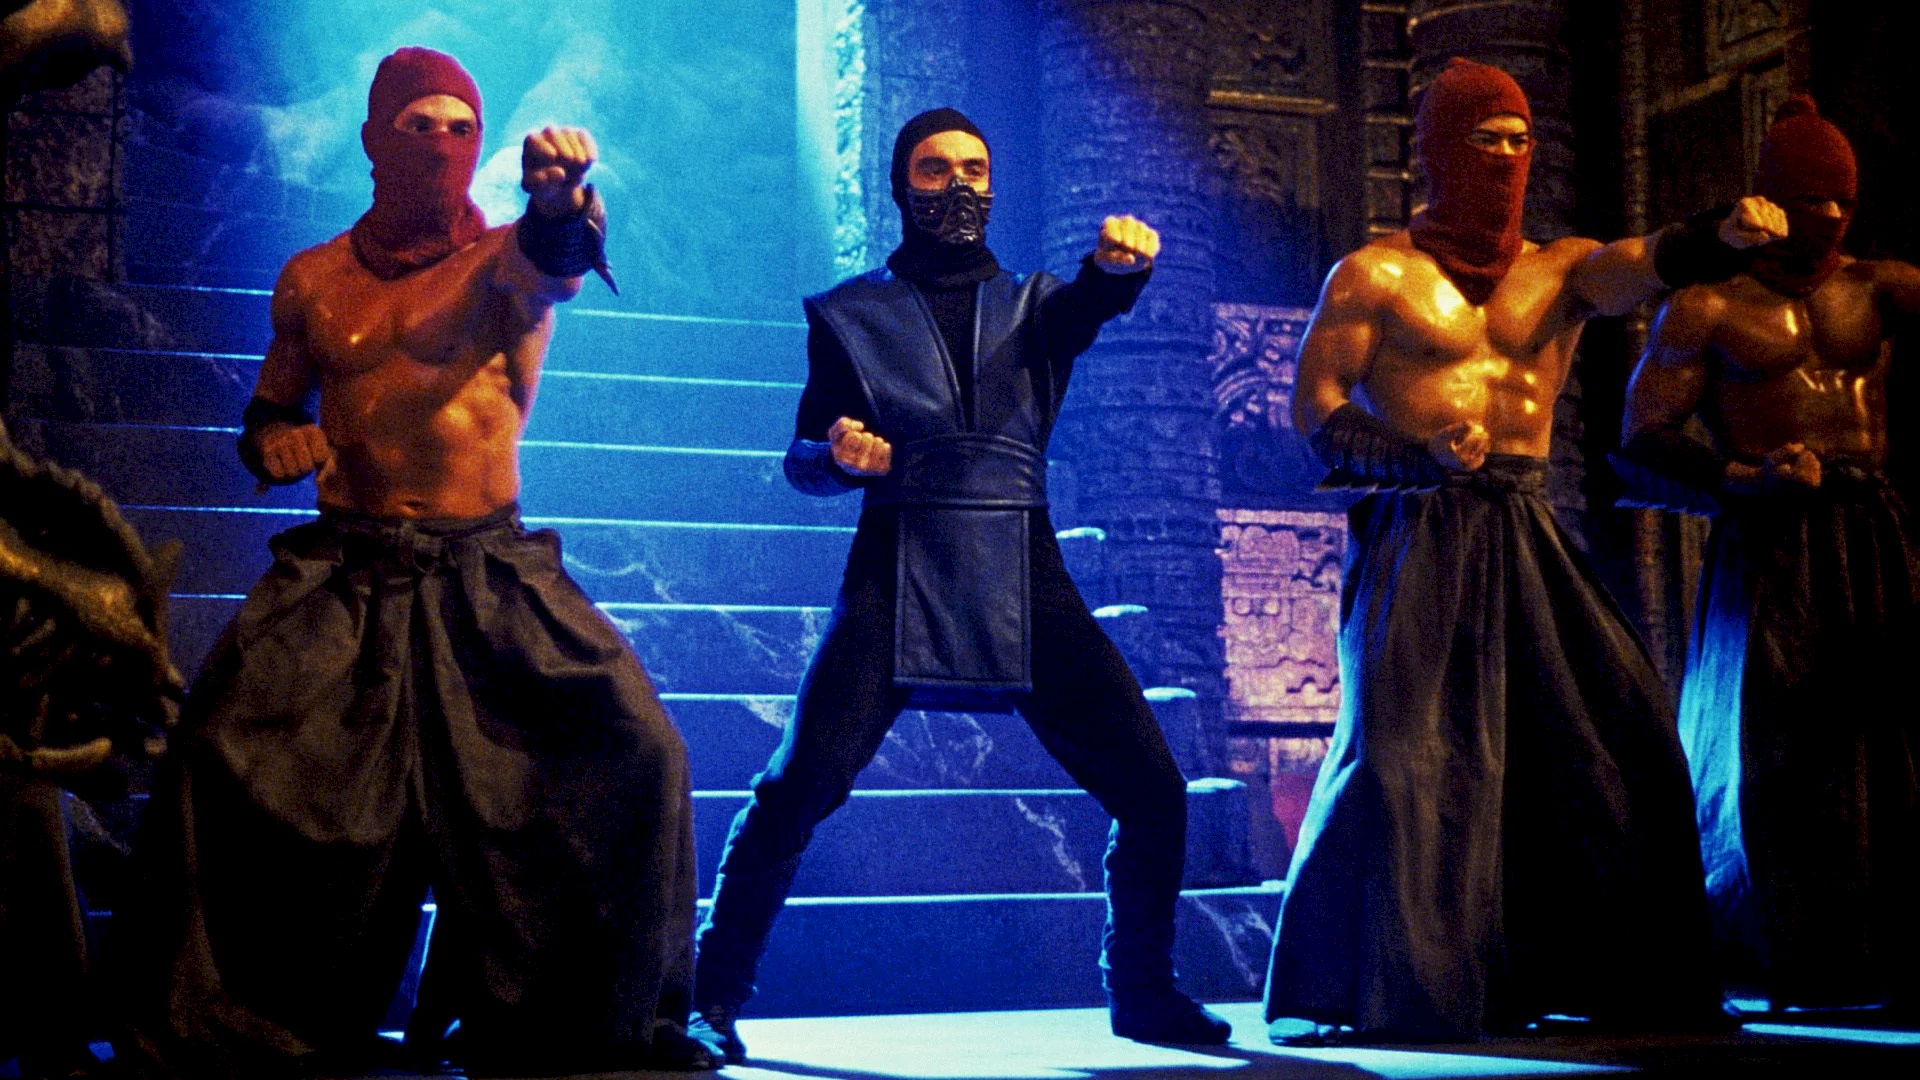 Photo du film : Mortal kombat